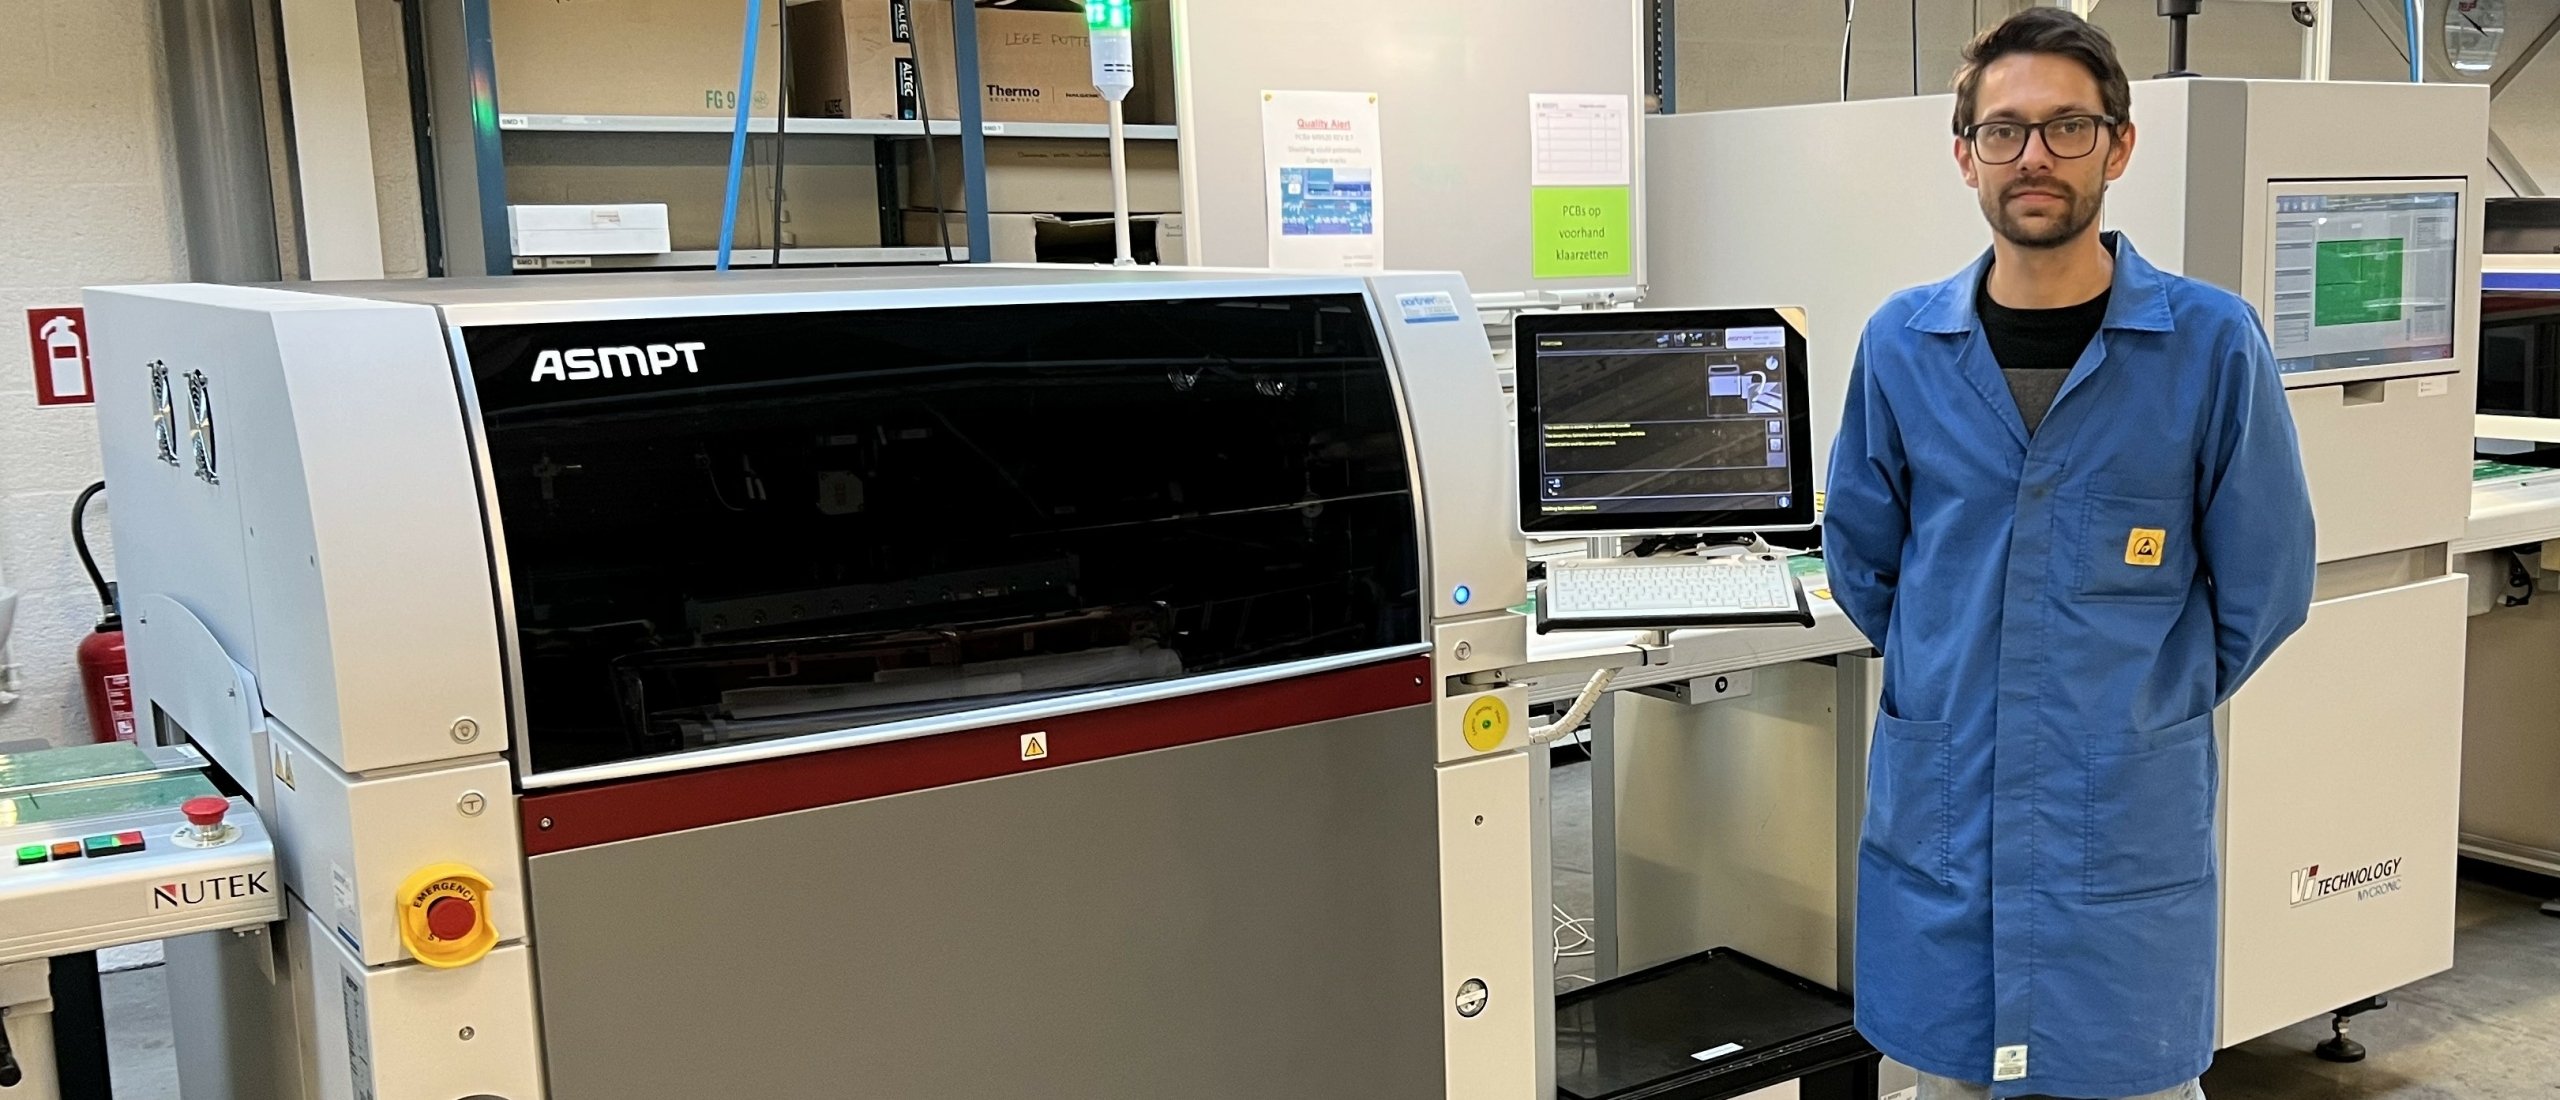 Partnertec installs ASMPT DEK Stencil printer and MBTECH stencil cleaner at Ekinops in Belgium